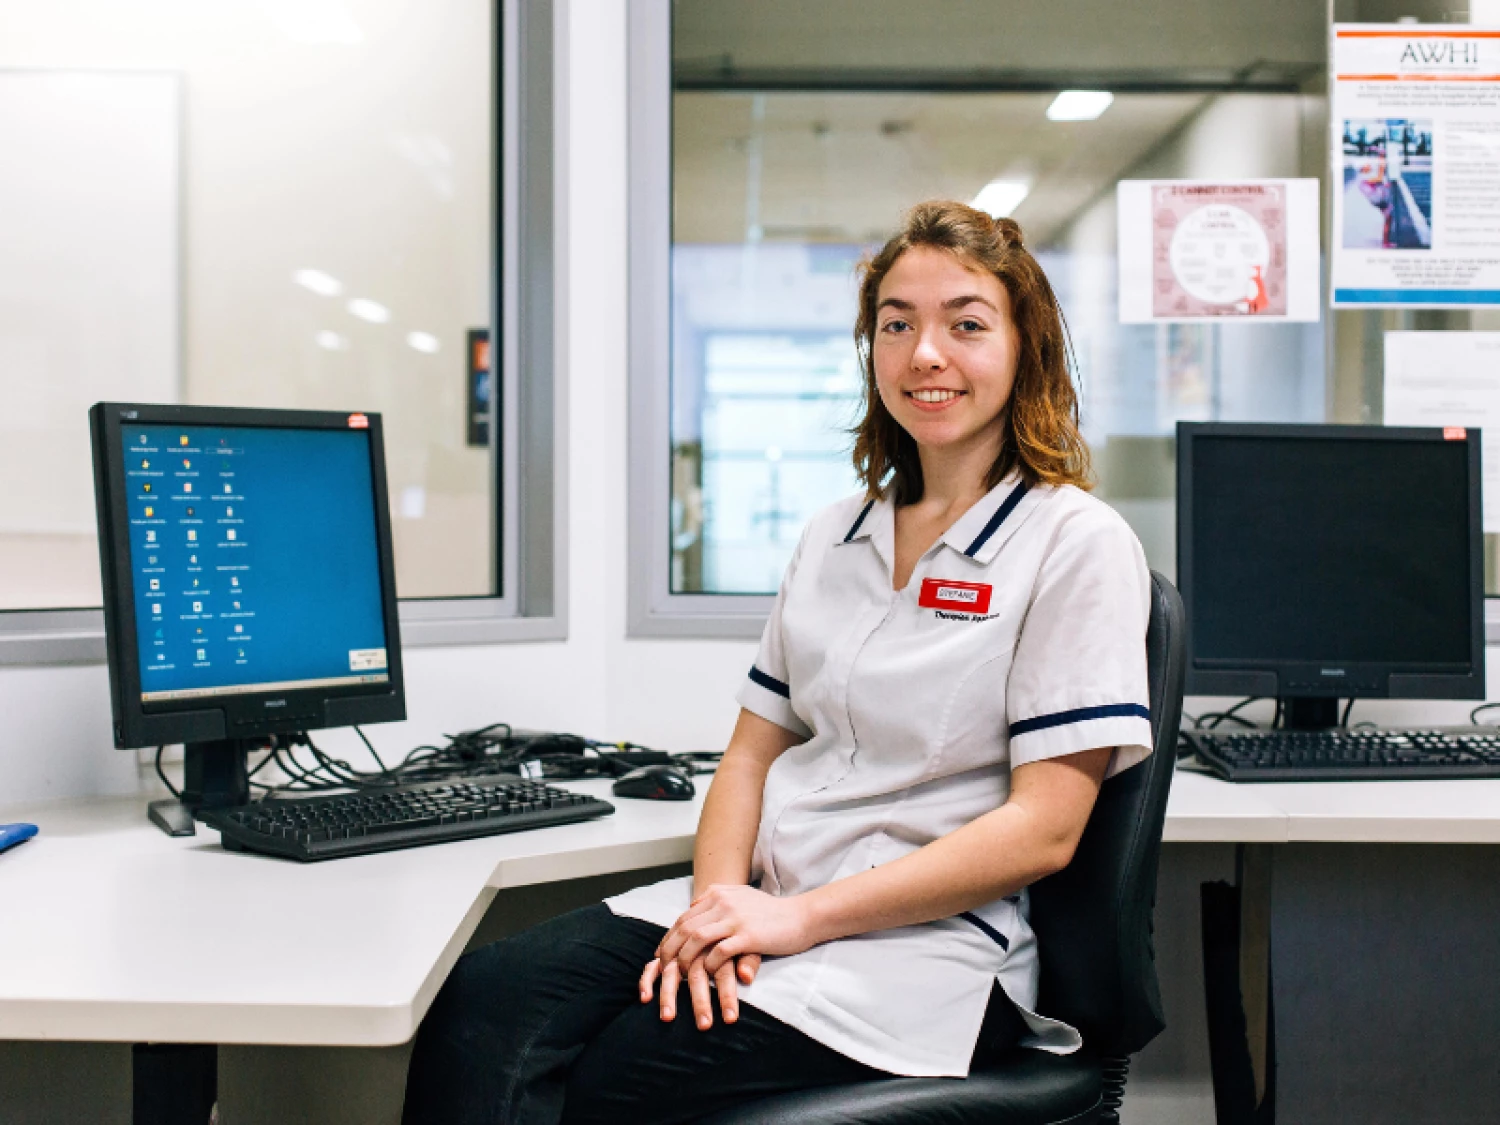 Health New Zealand Kaimahi Stefanie sitting at her desk smiling in her white uniform